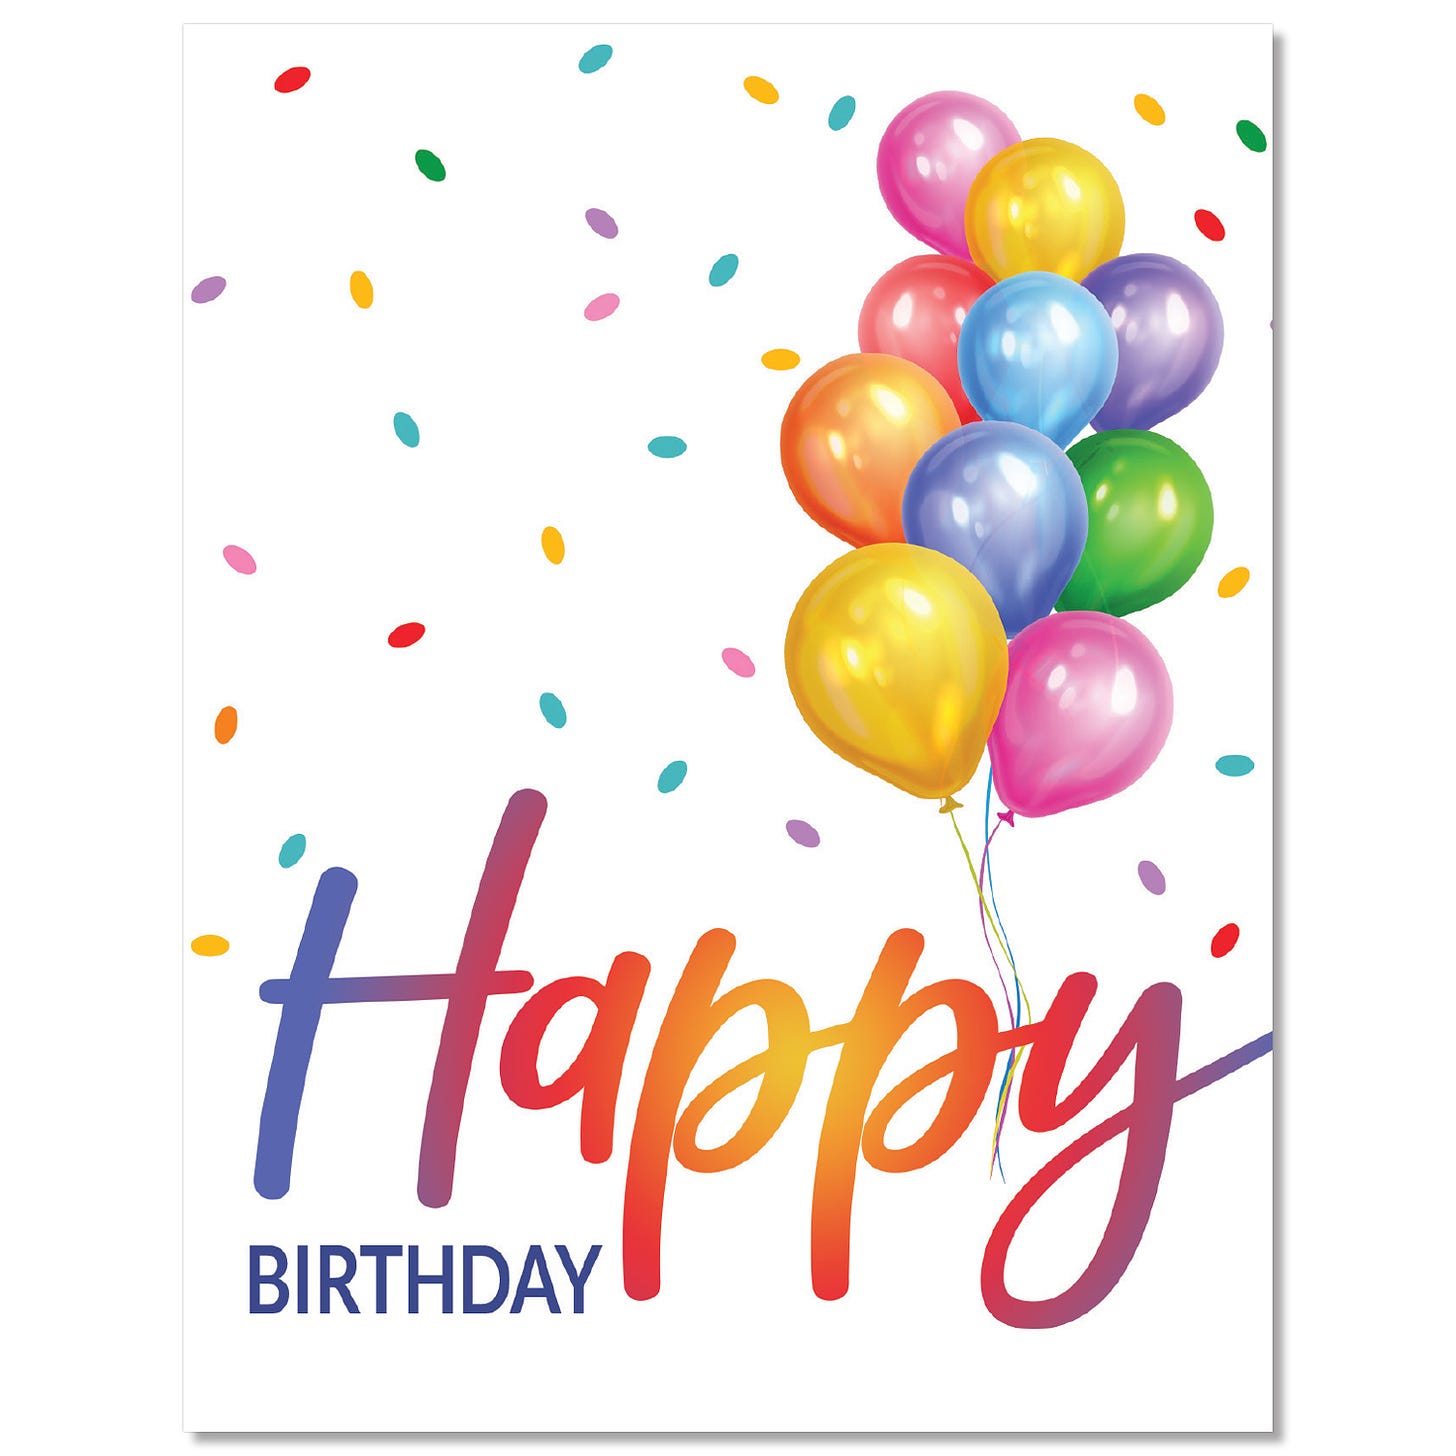 Big Happy Birthday Card | HRdirect